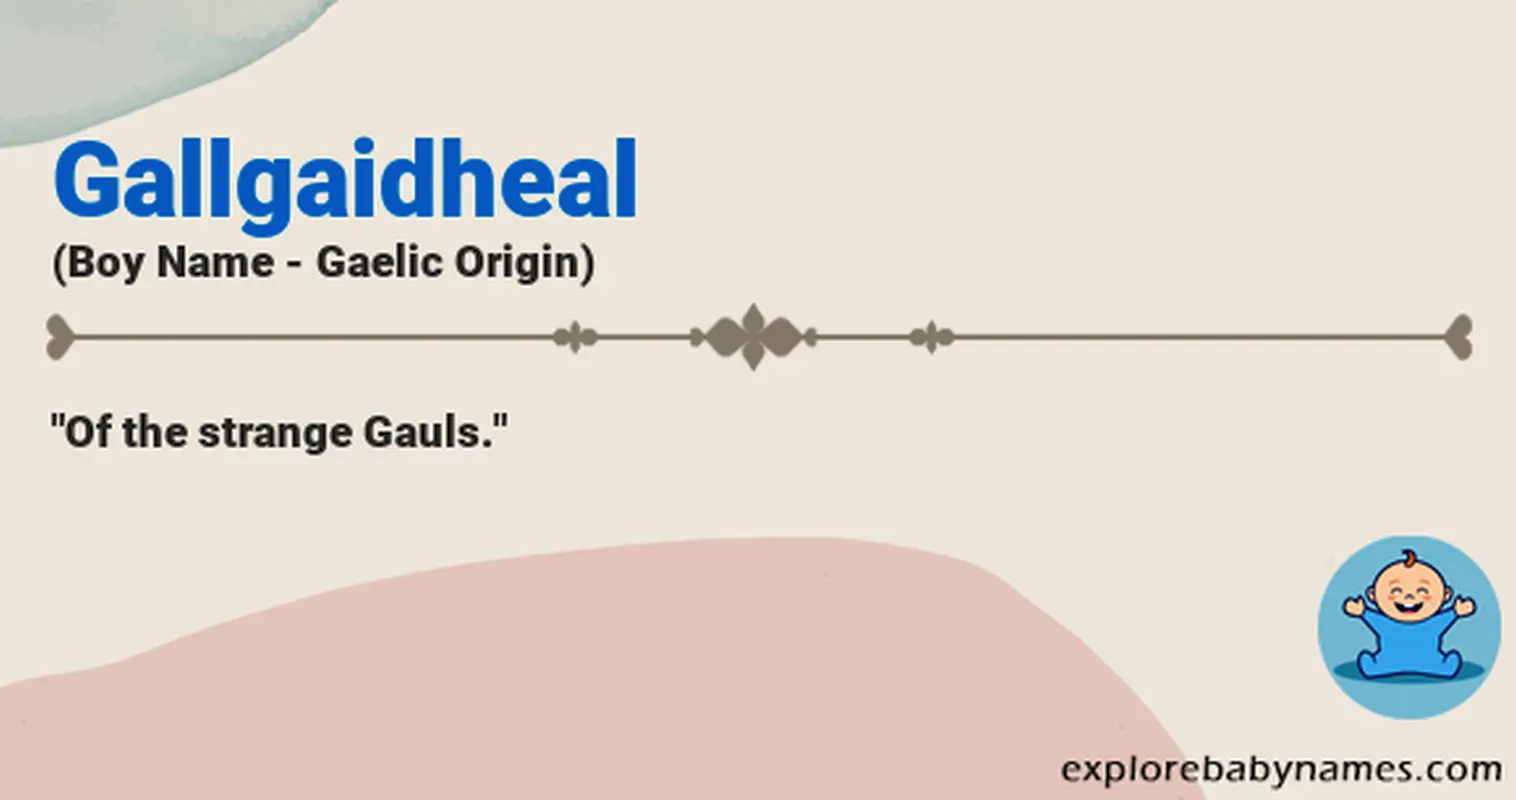 Meaning of Gallgaidheal